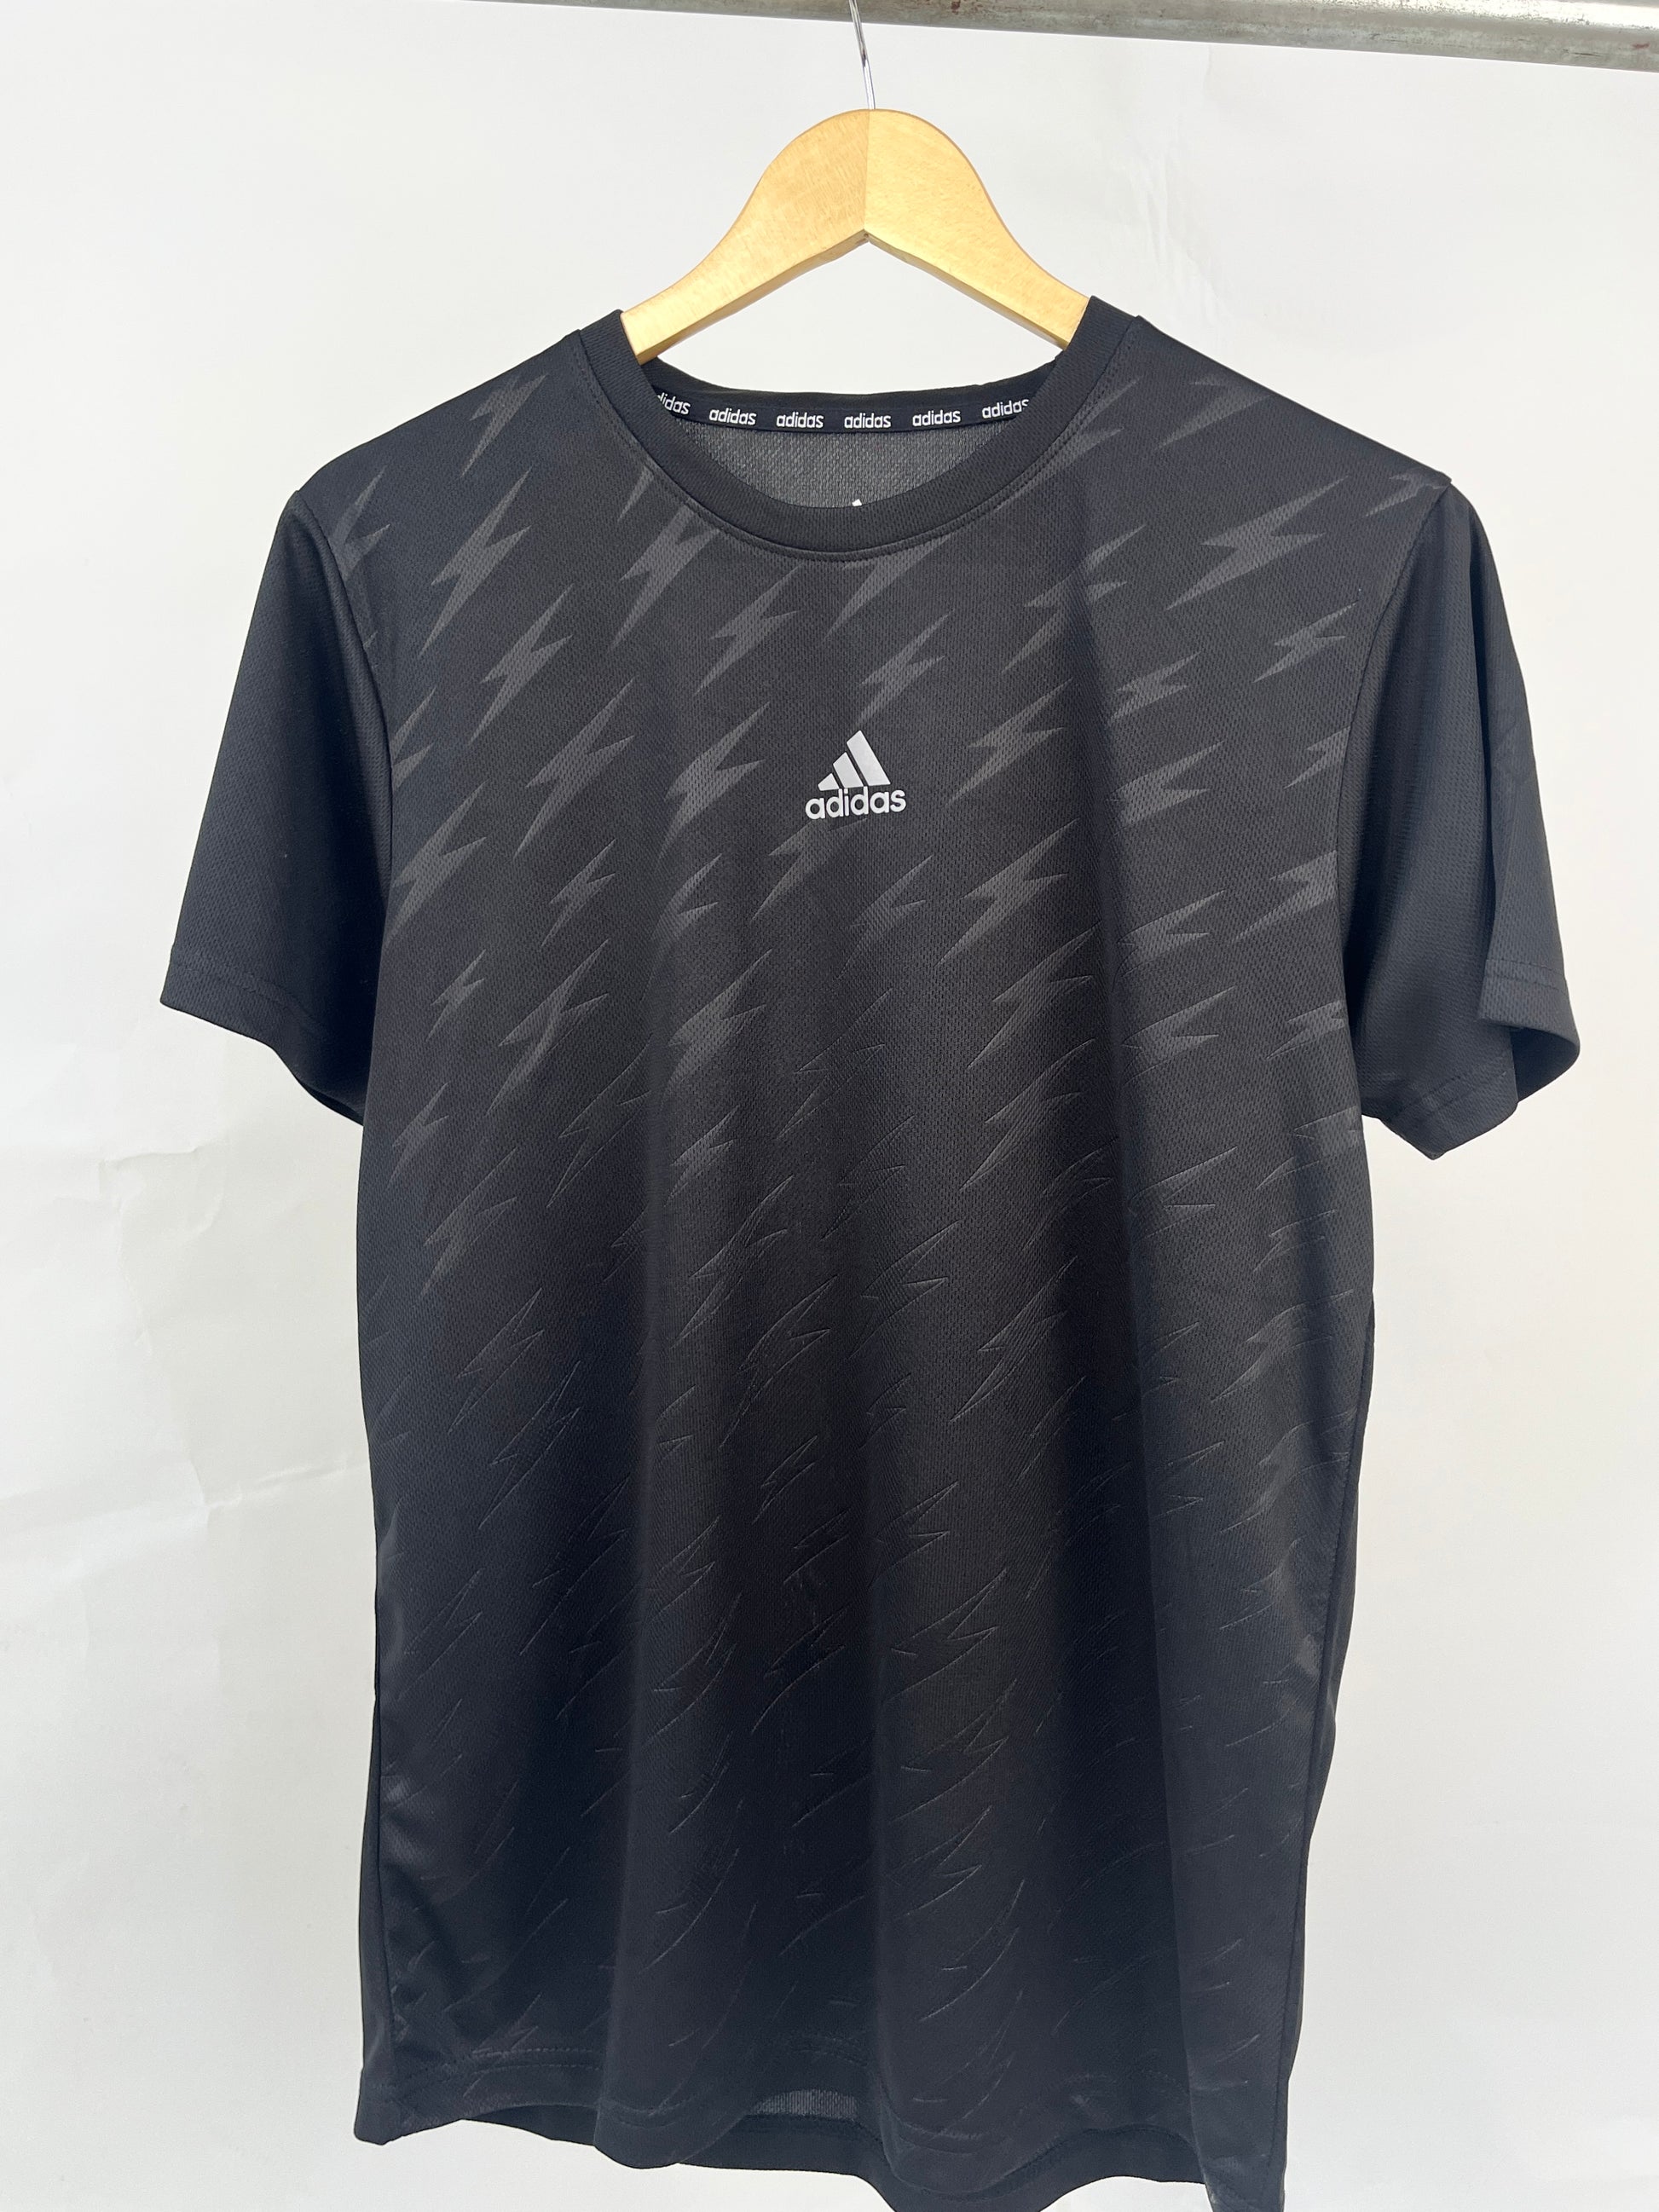 Adidas middle logo Lightning sports t-shirt in black – Garmisland